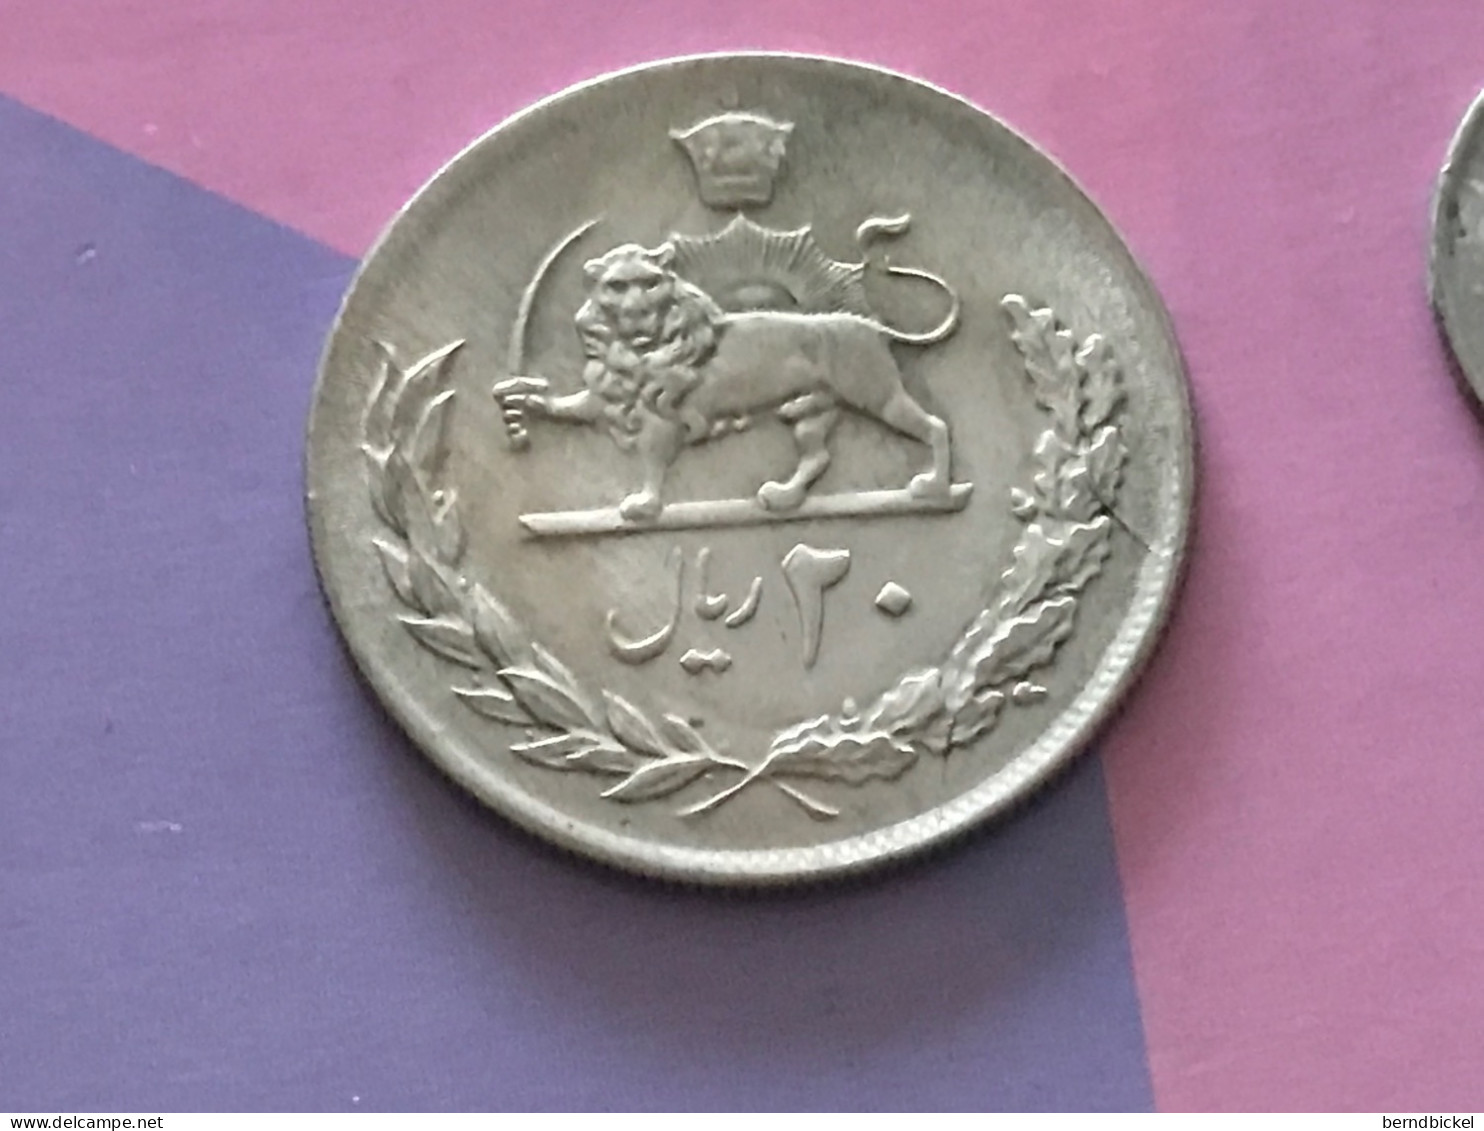 Münze Münzen Umlaufmünze Iran 20 Rial 1977 - Iran